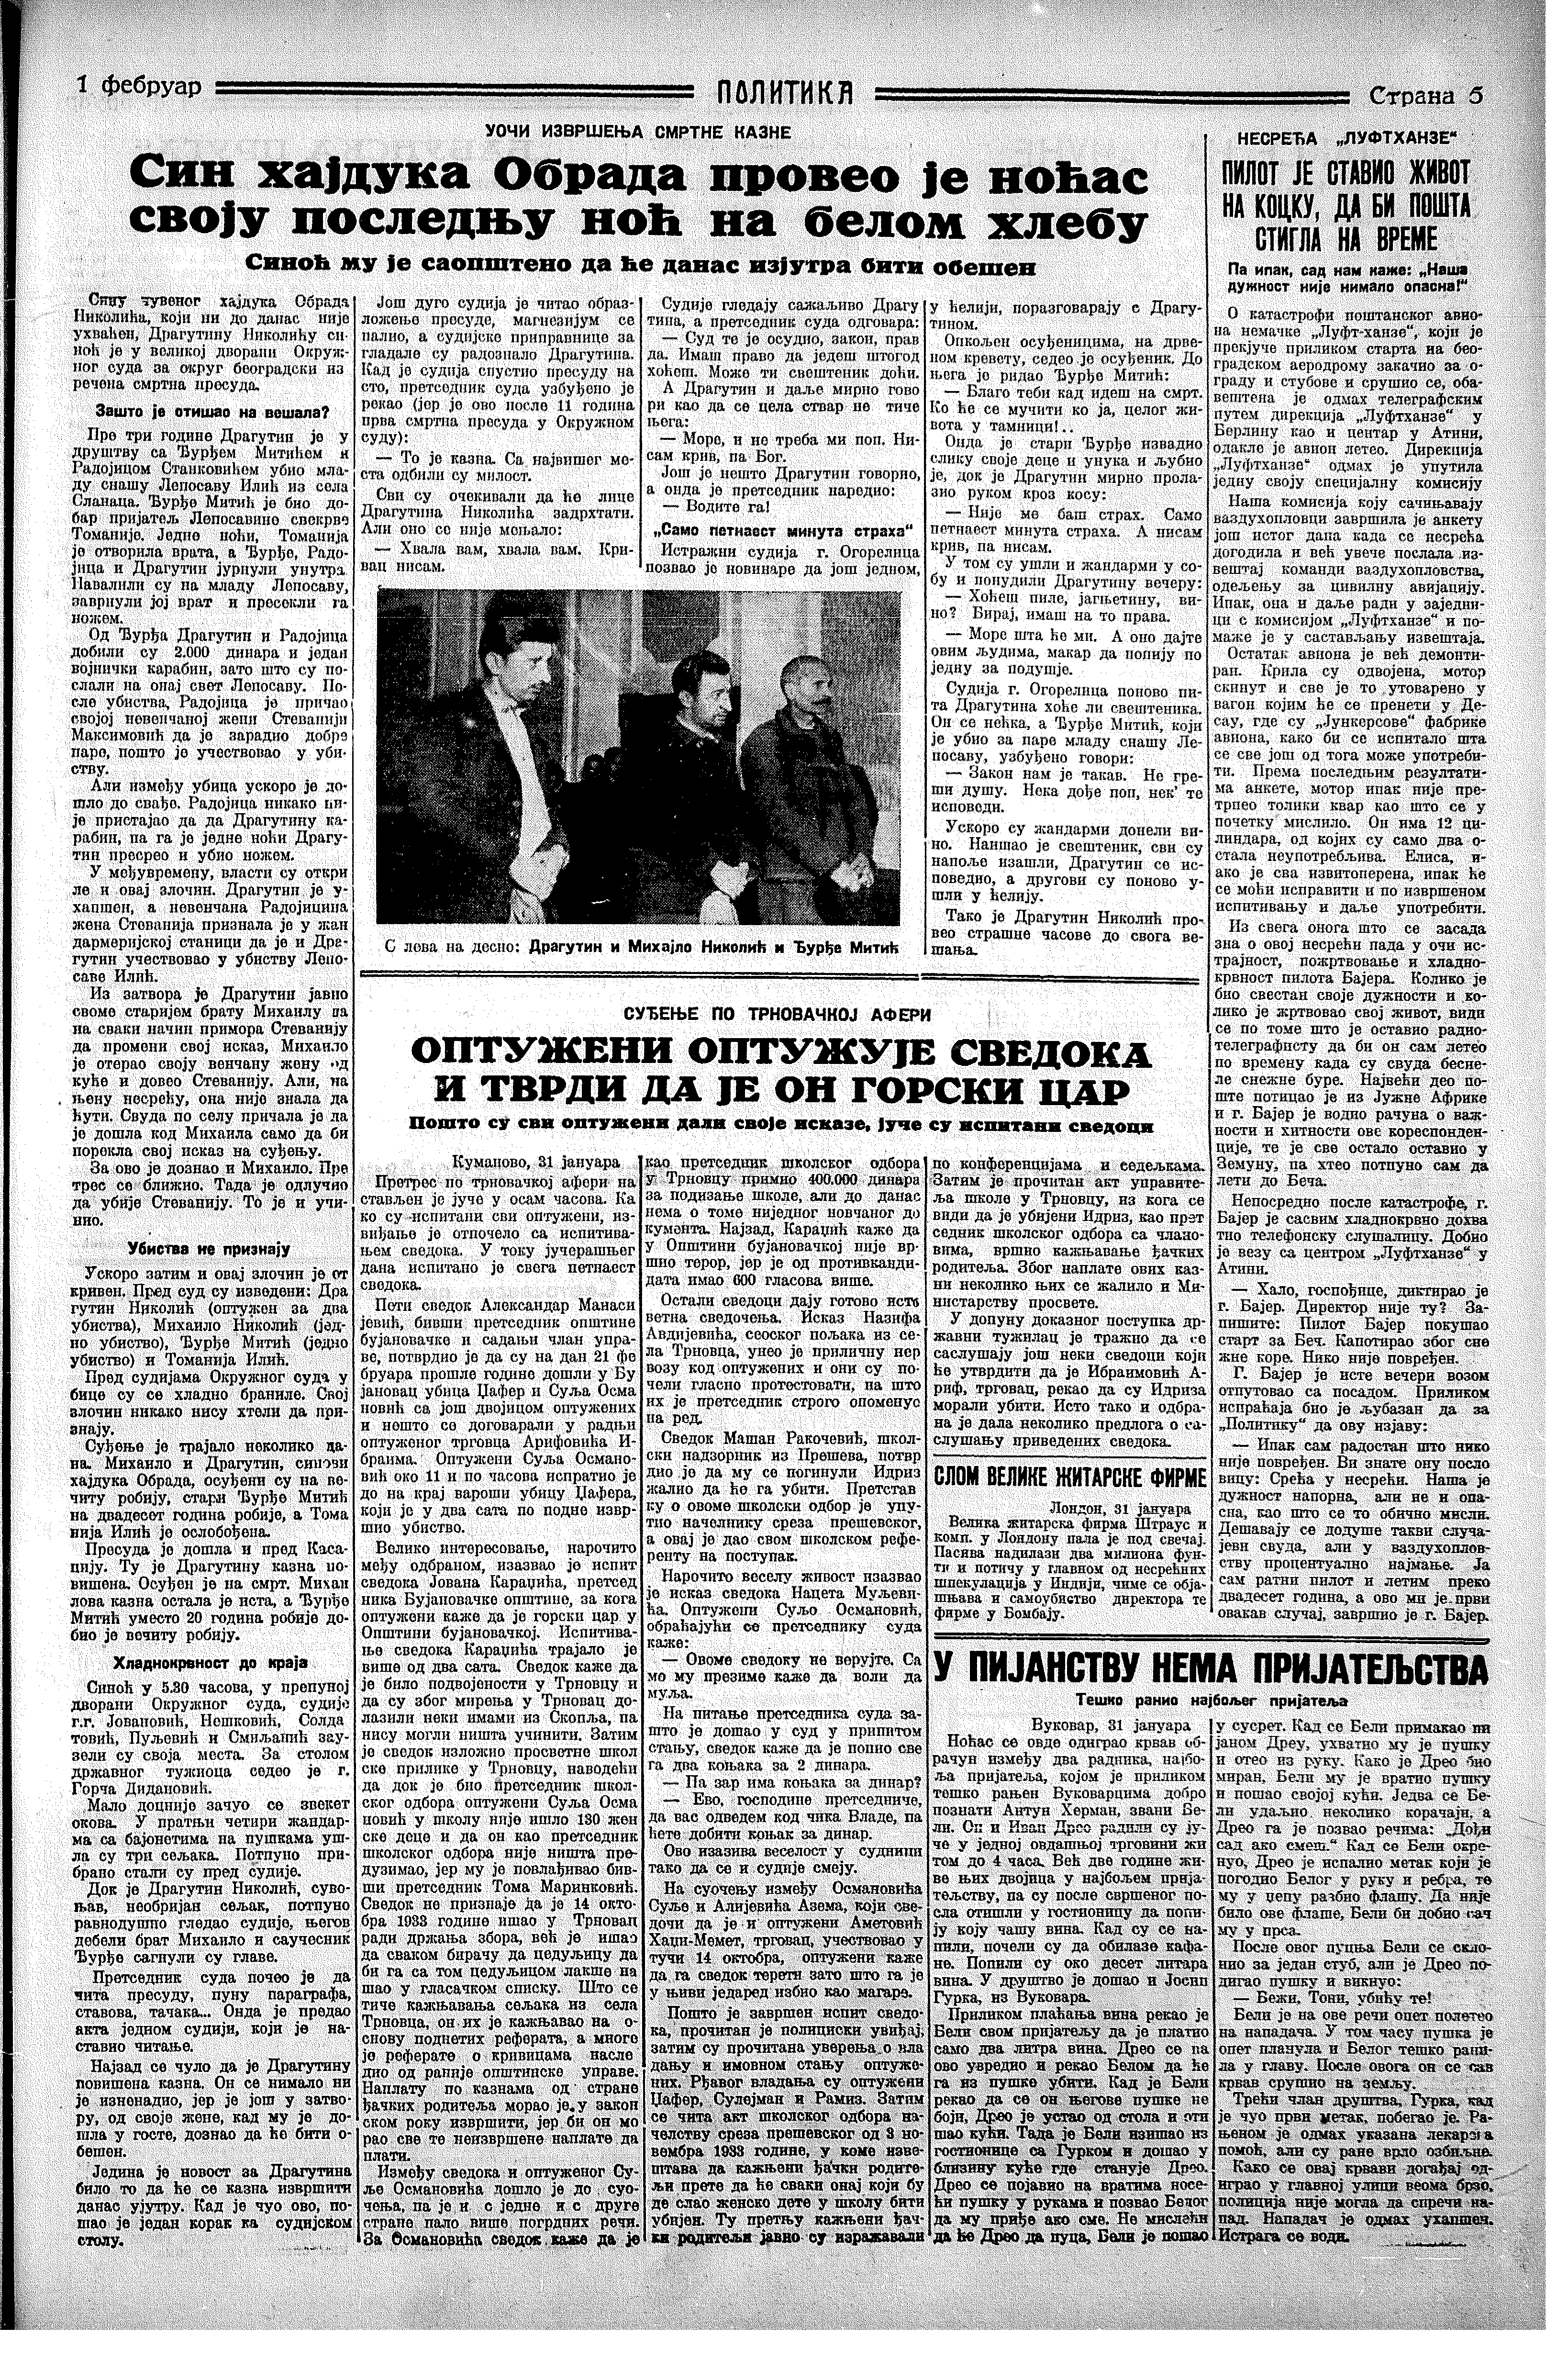 Sin hajduka na belom hlebu, Politika, 01.02.1935.